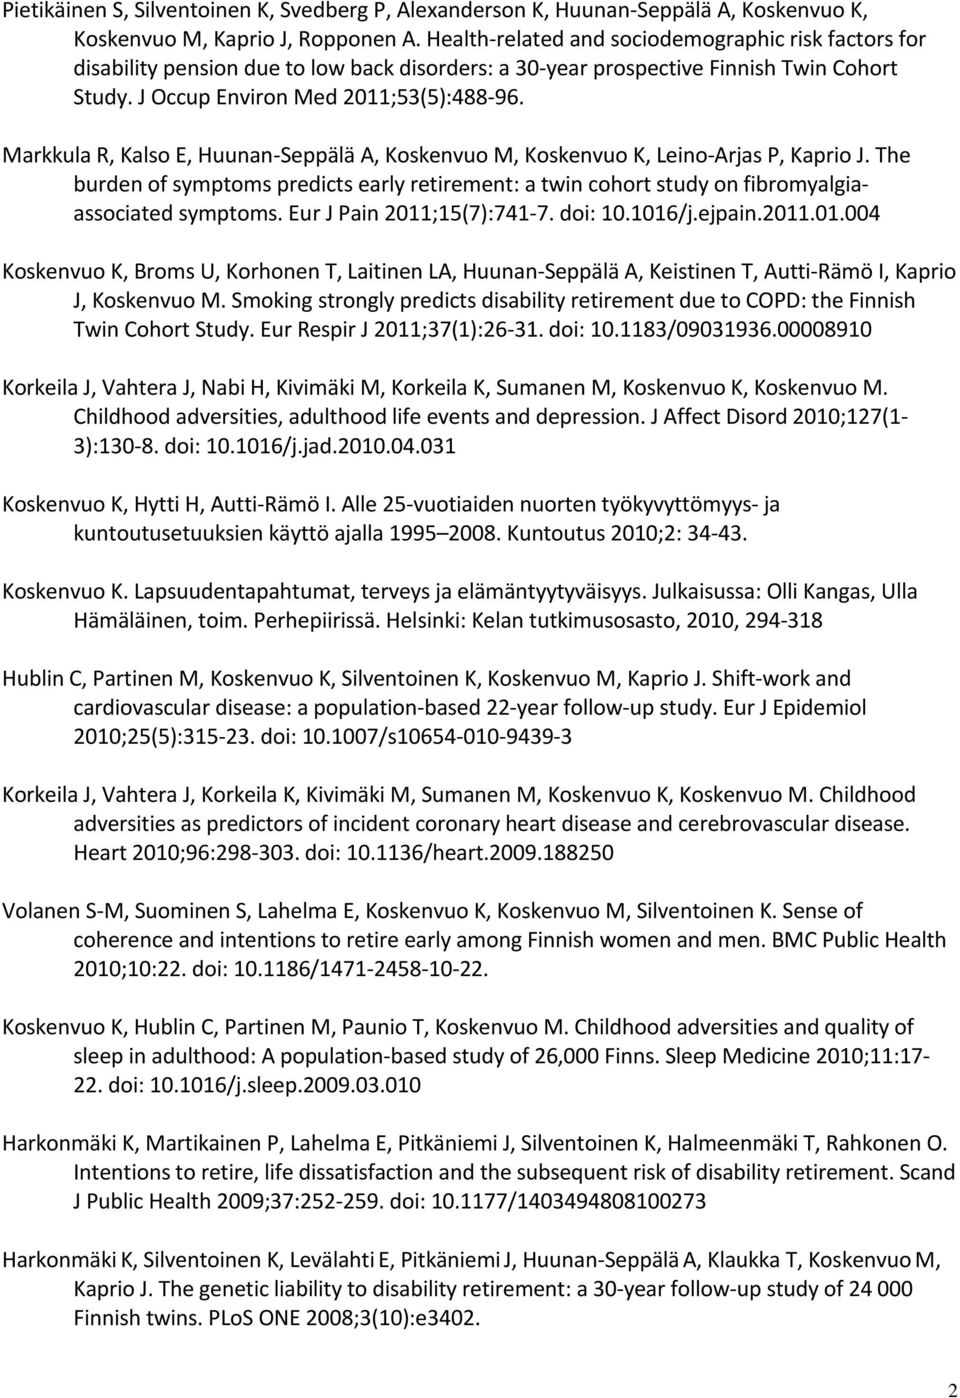 Markkula R, Kalso E, Huunan-Seppälä A, Koskenvuo M, Koskenvuo K, Leino-Arjas P, Kaprio J. The burden of symptoms predicts early retirement: a twin cohort study on fibromyalgiaassociated symptoms.